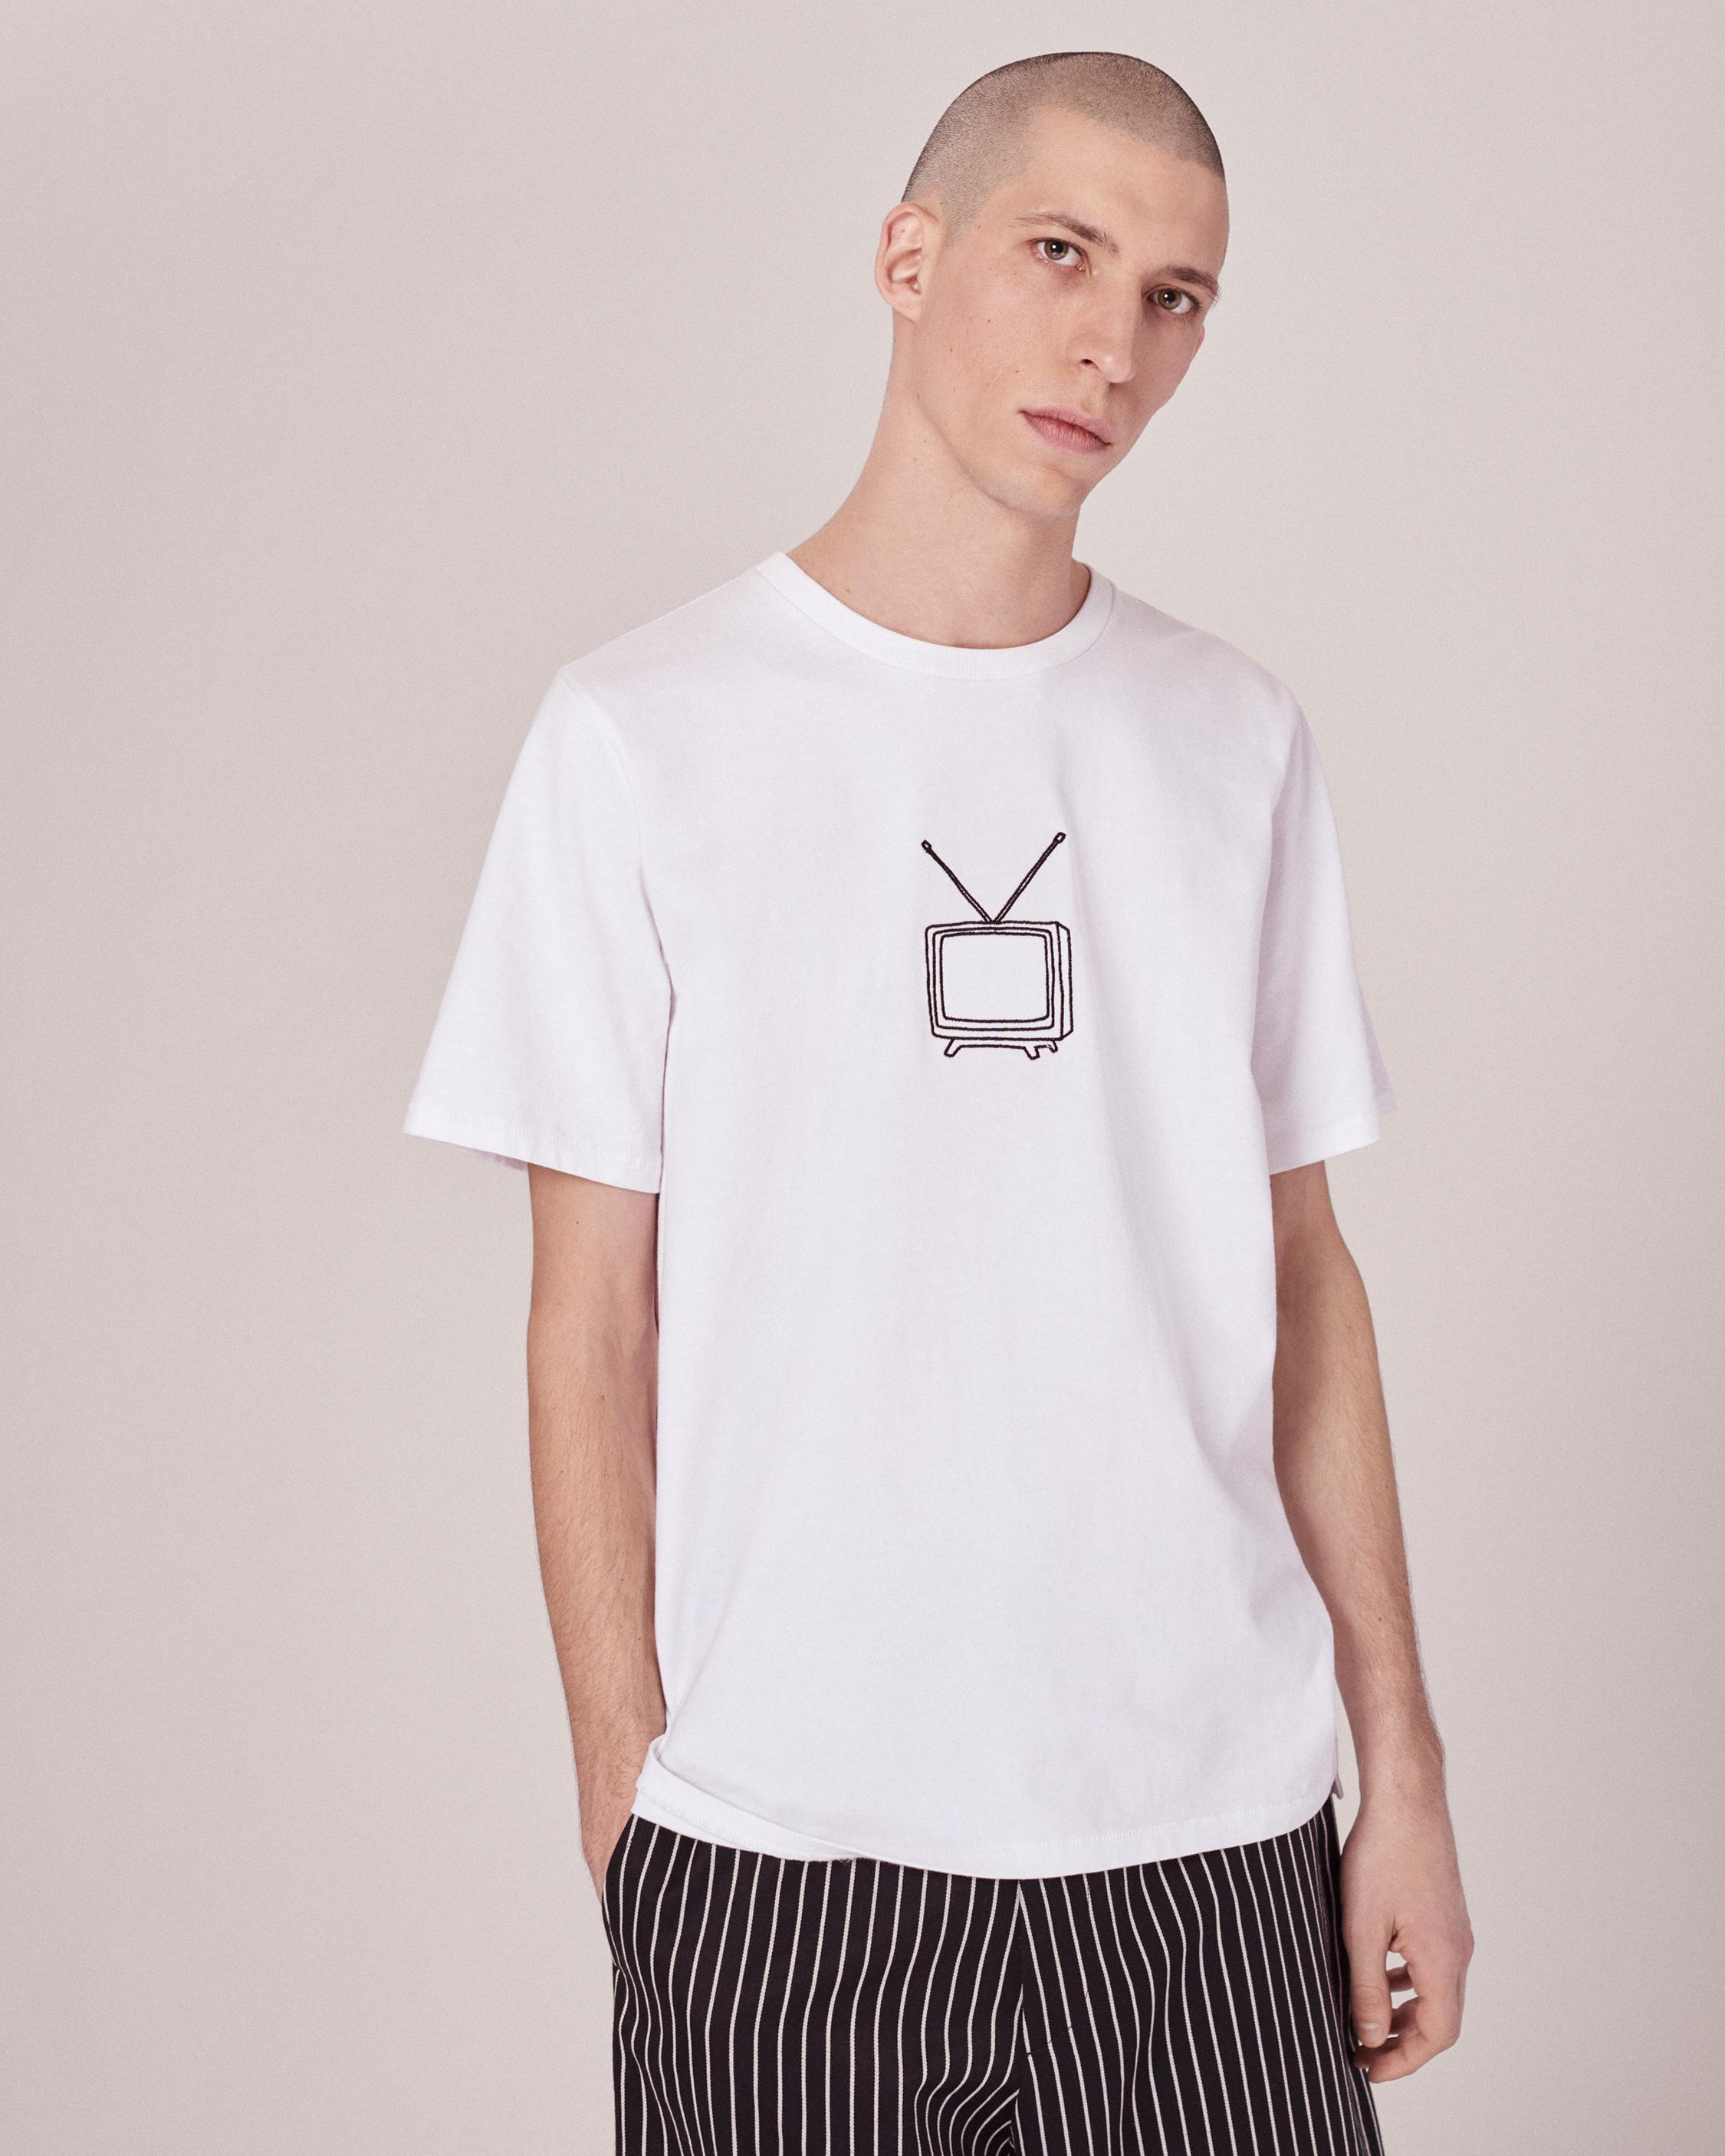 Lyst - Rag & Bone Tv Embroidery T-shirt in White for Men